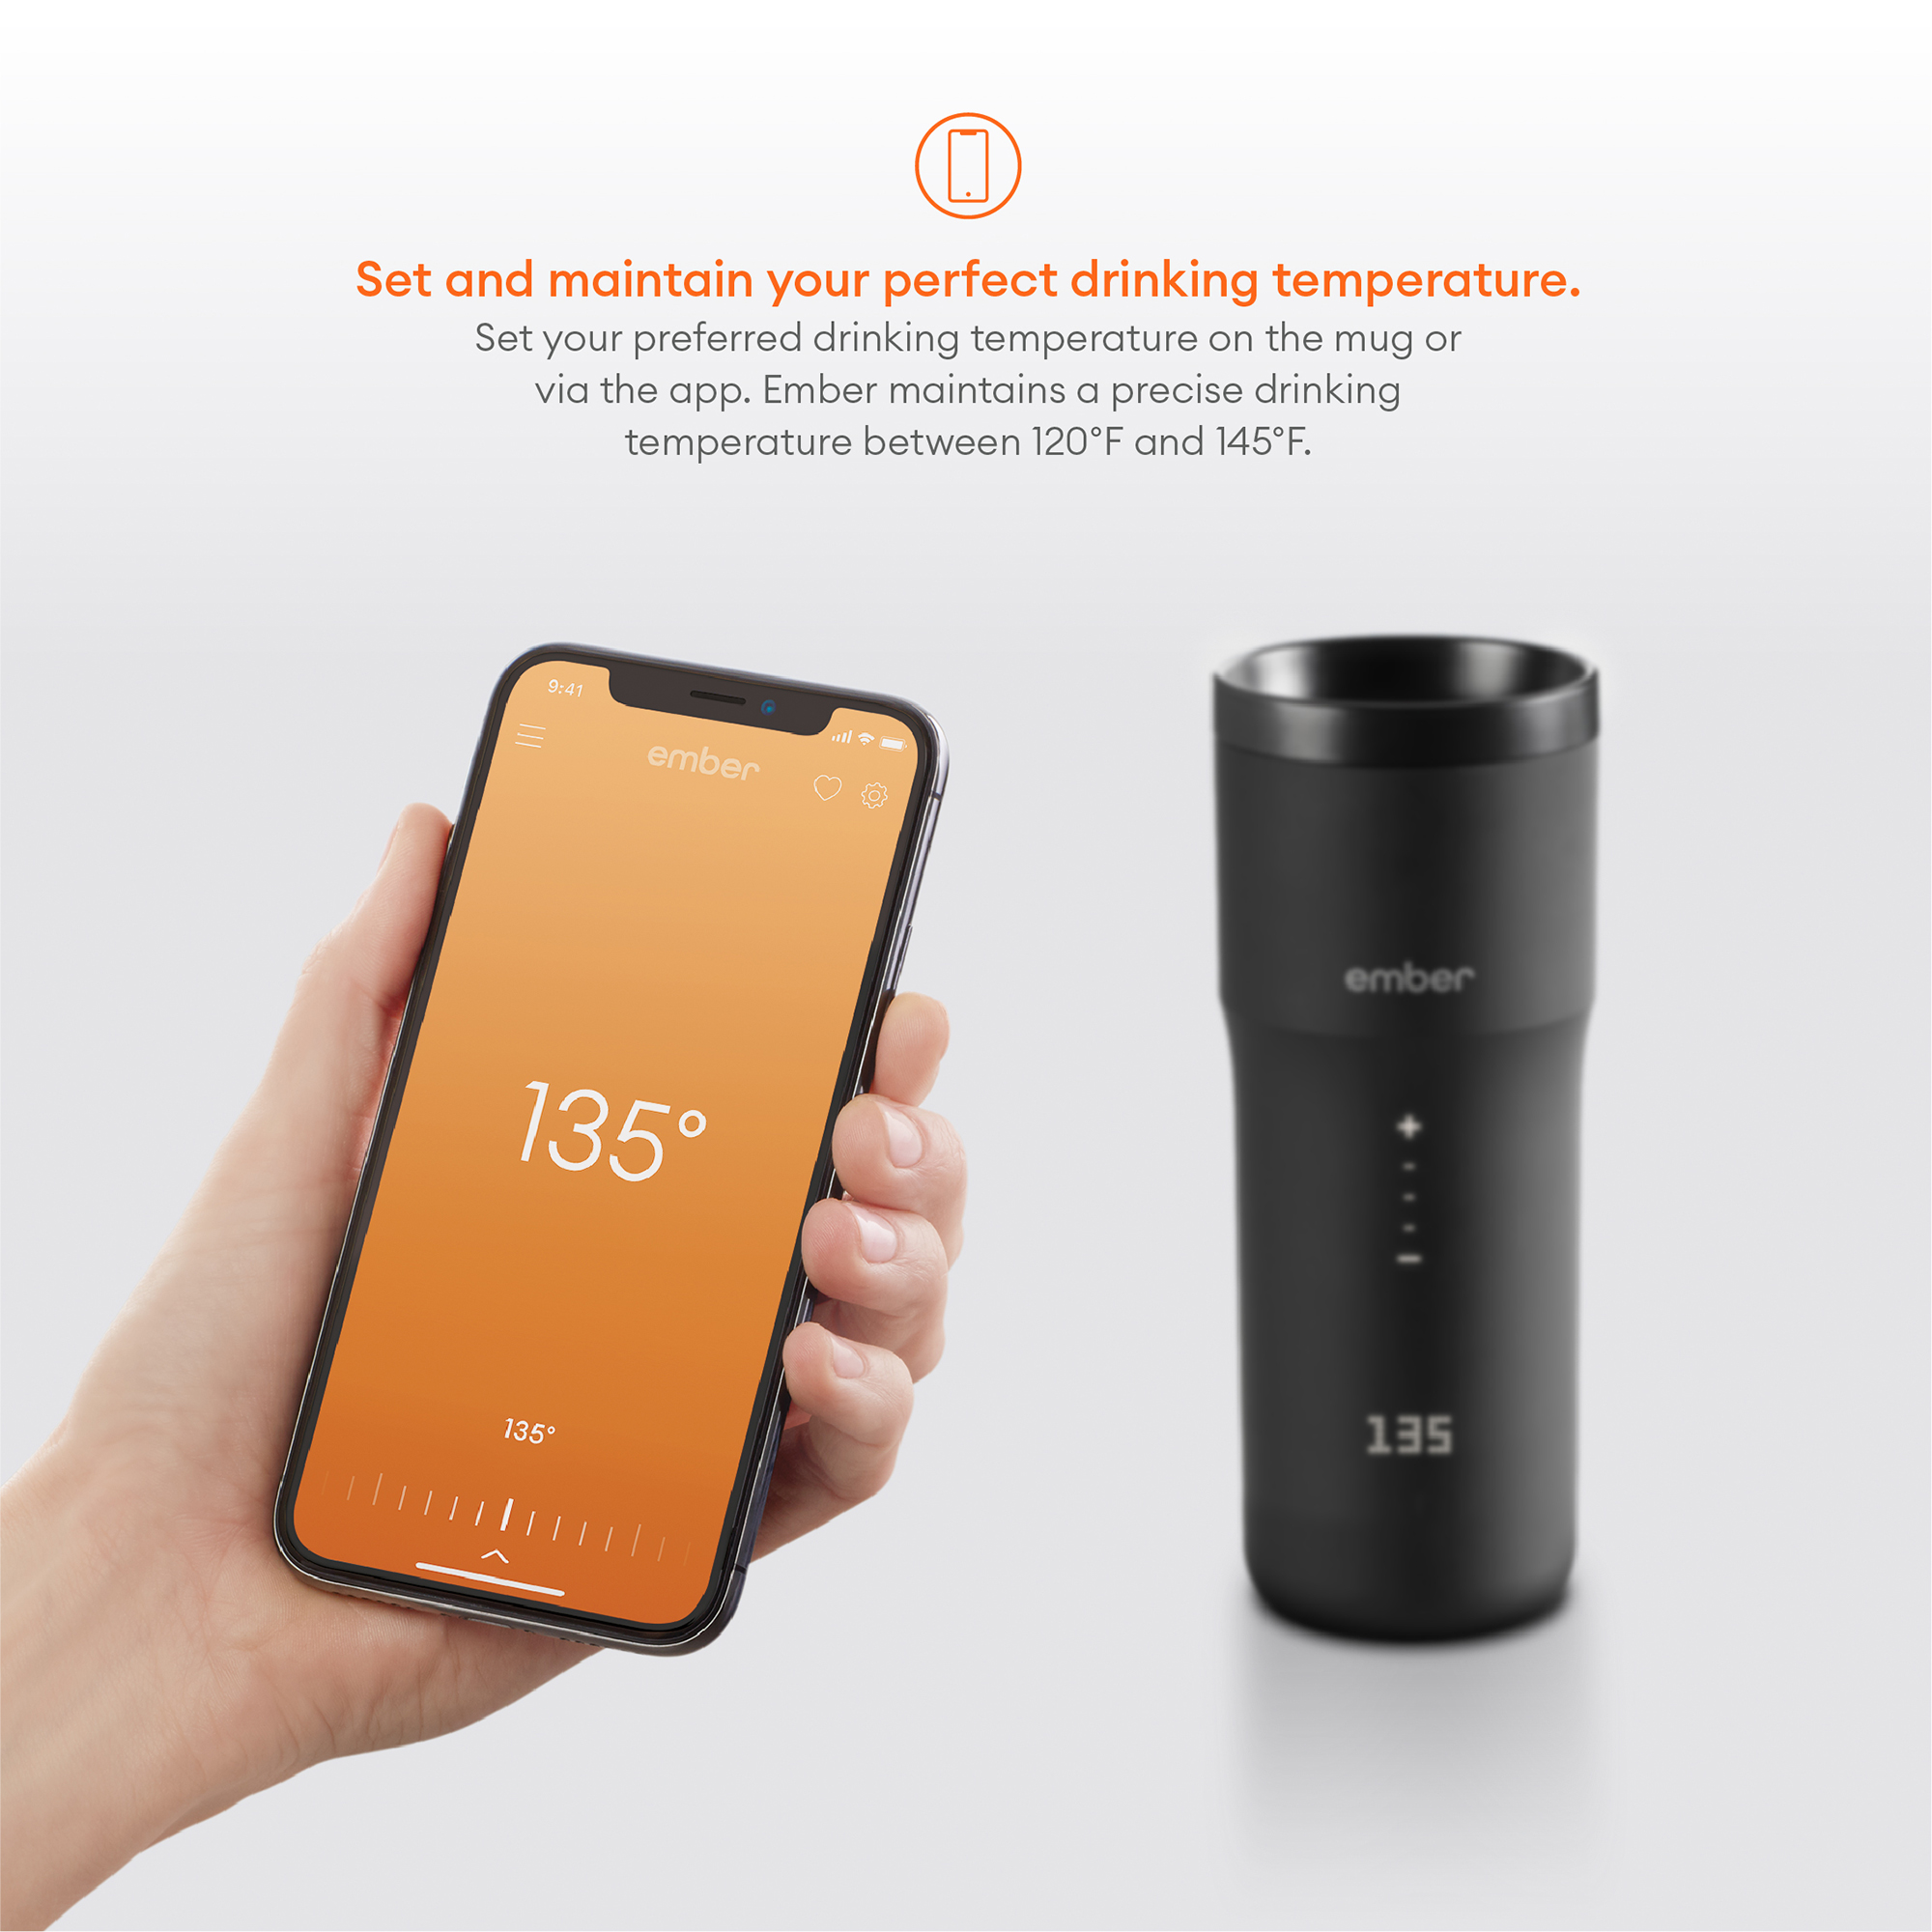 NEW Ember Temperature Control Smart Mug 2, 12 oz, Black, 3-hr Battery Life - App Controlled Heated Coffee Travel Mug - Improved Design - image 2 of 6